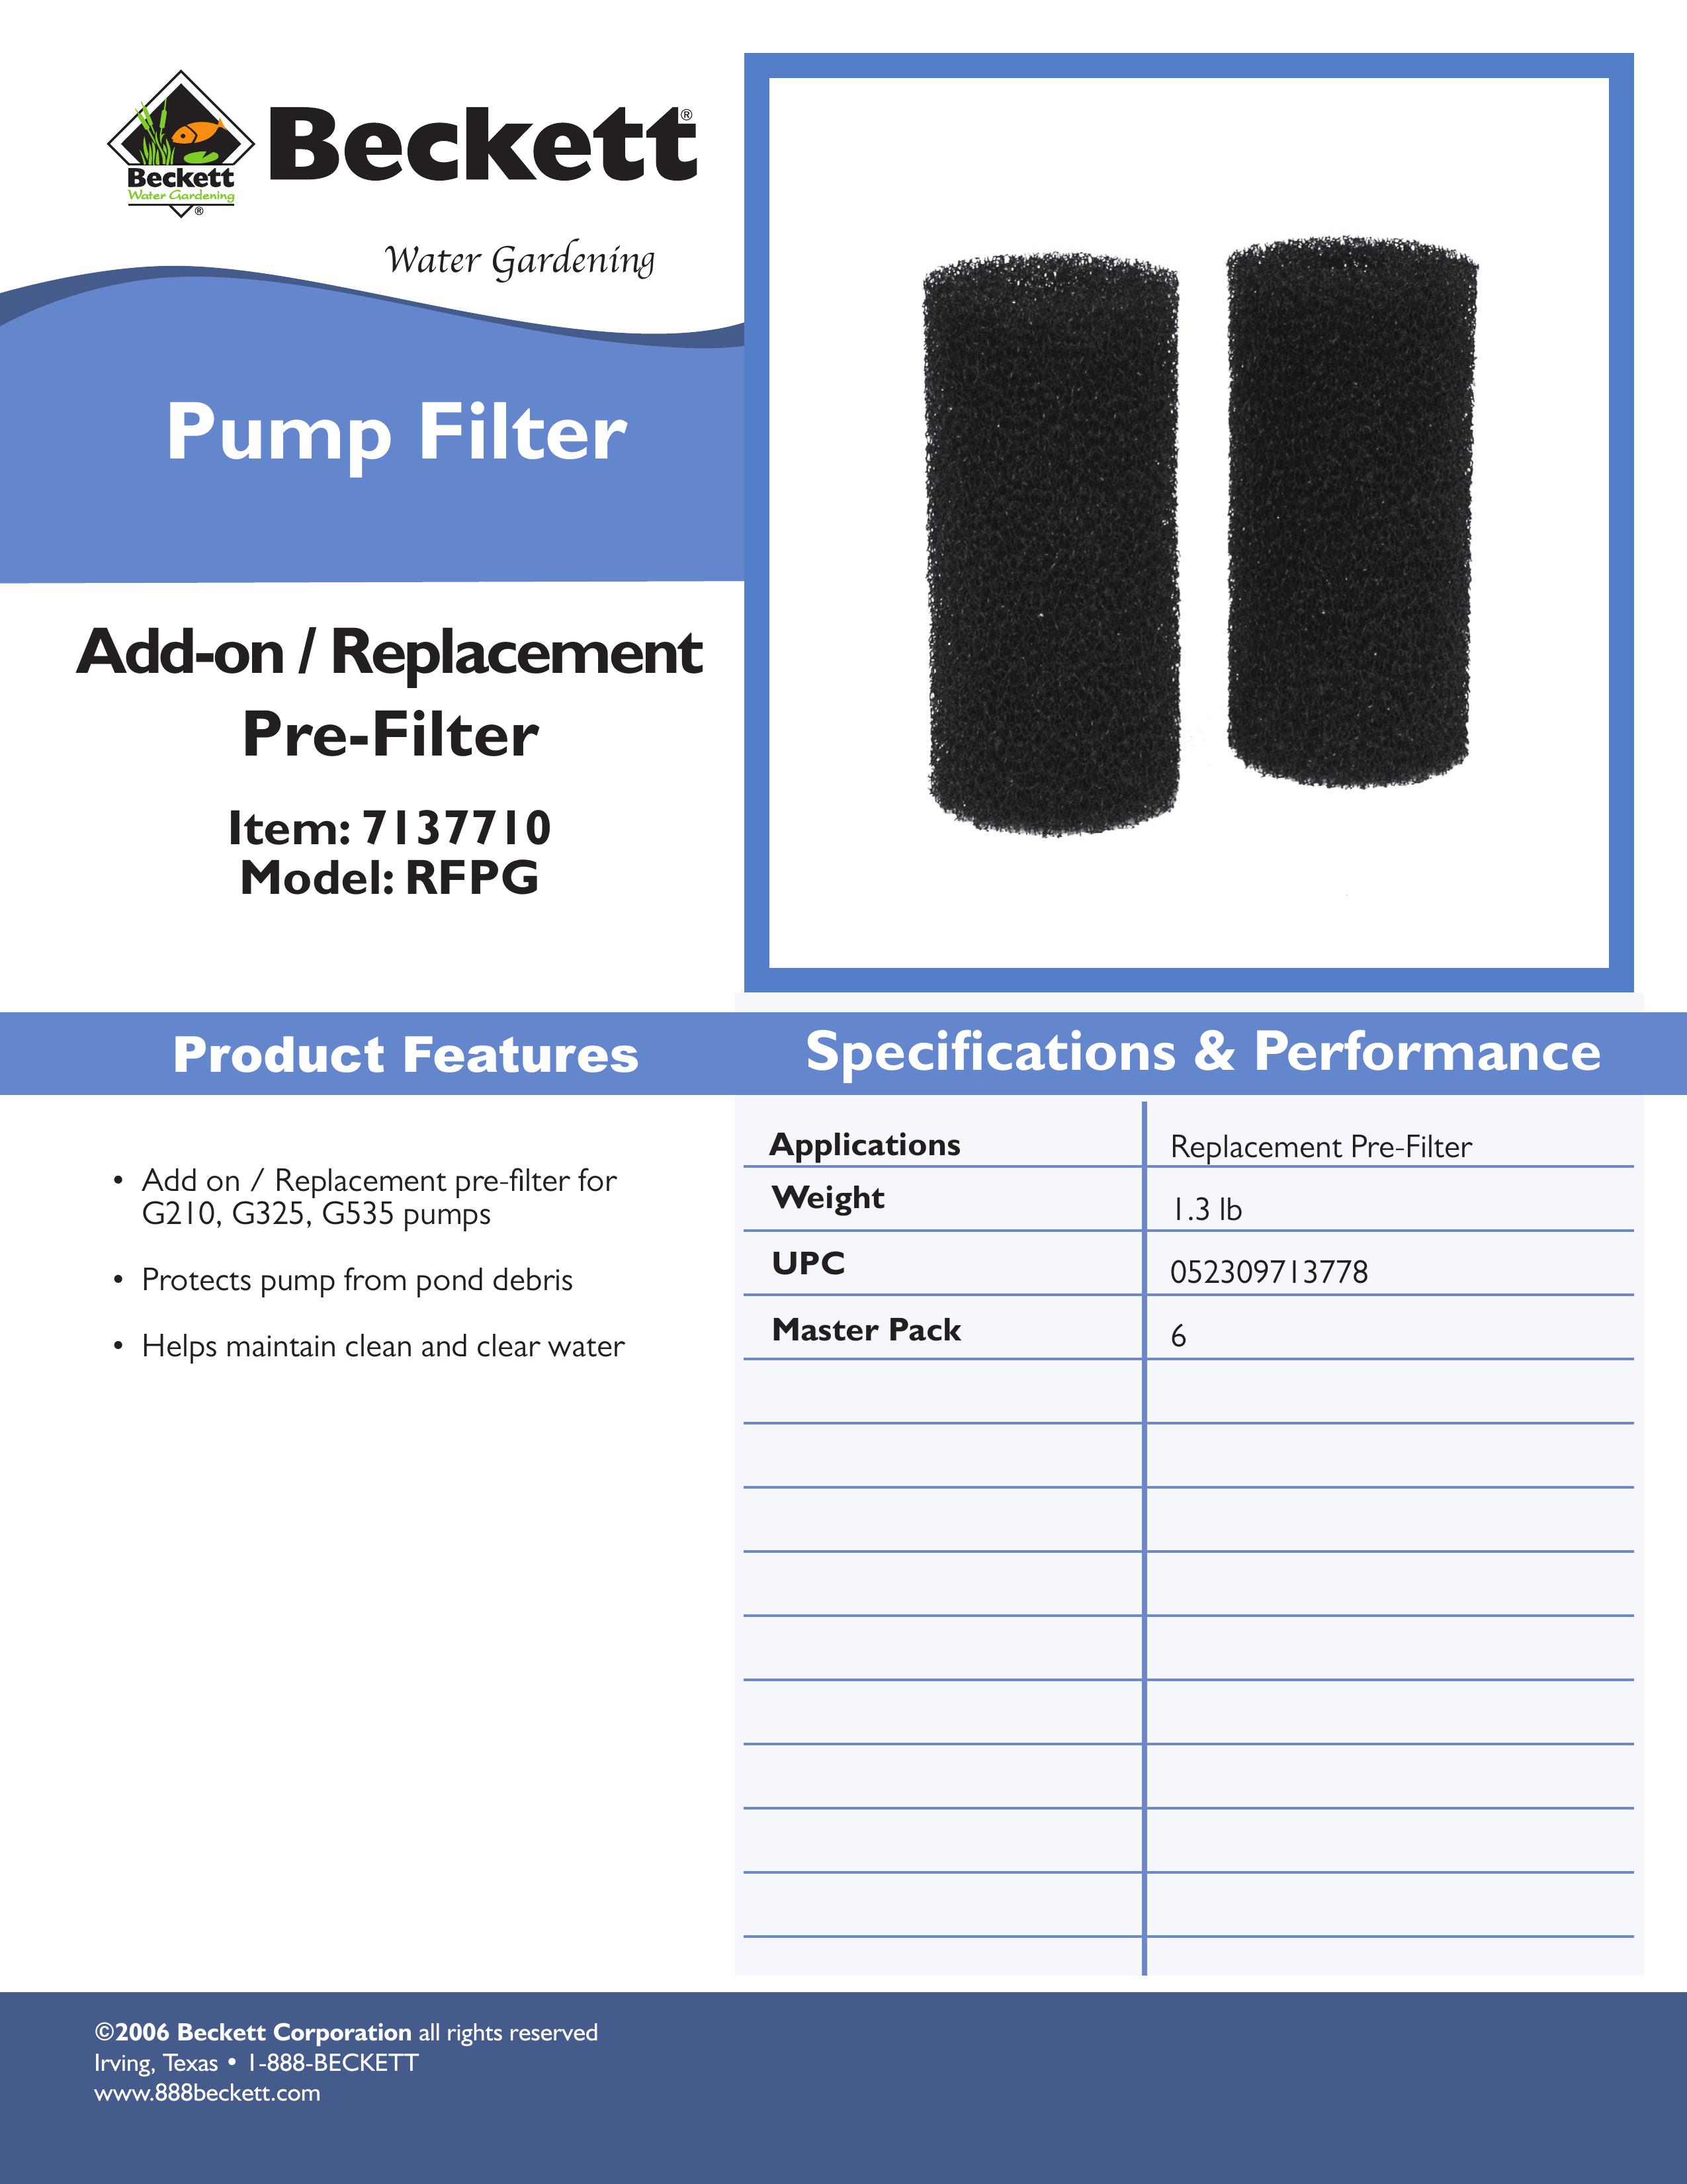 Beckett Water Gardening RFPG Water Dispenser User Manual